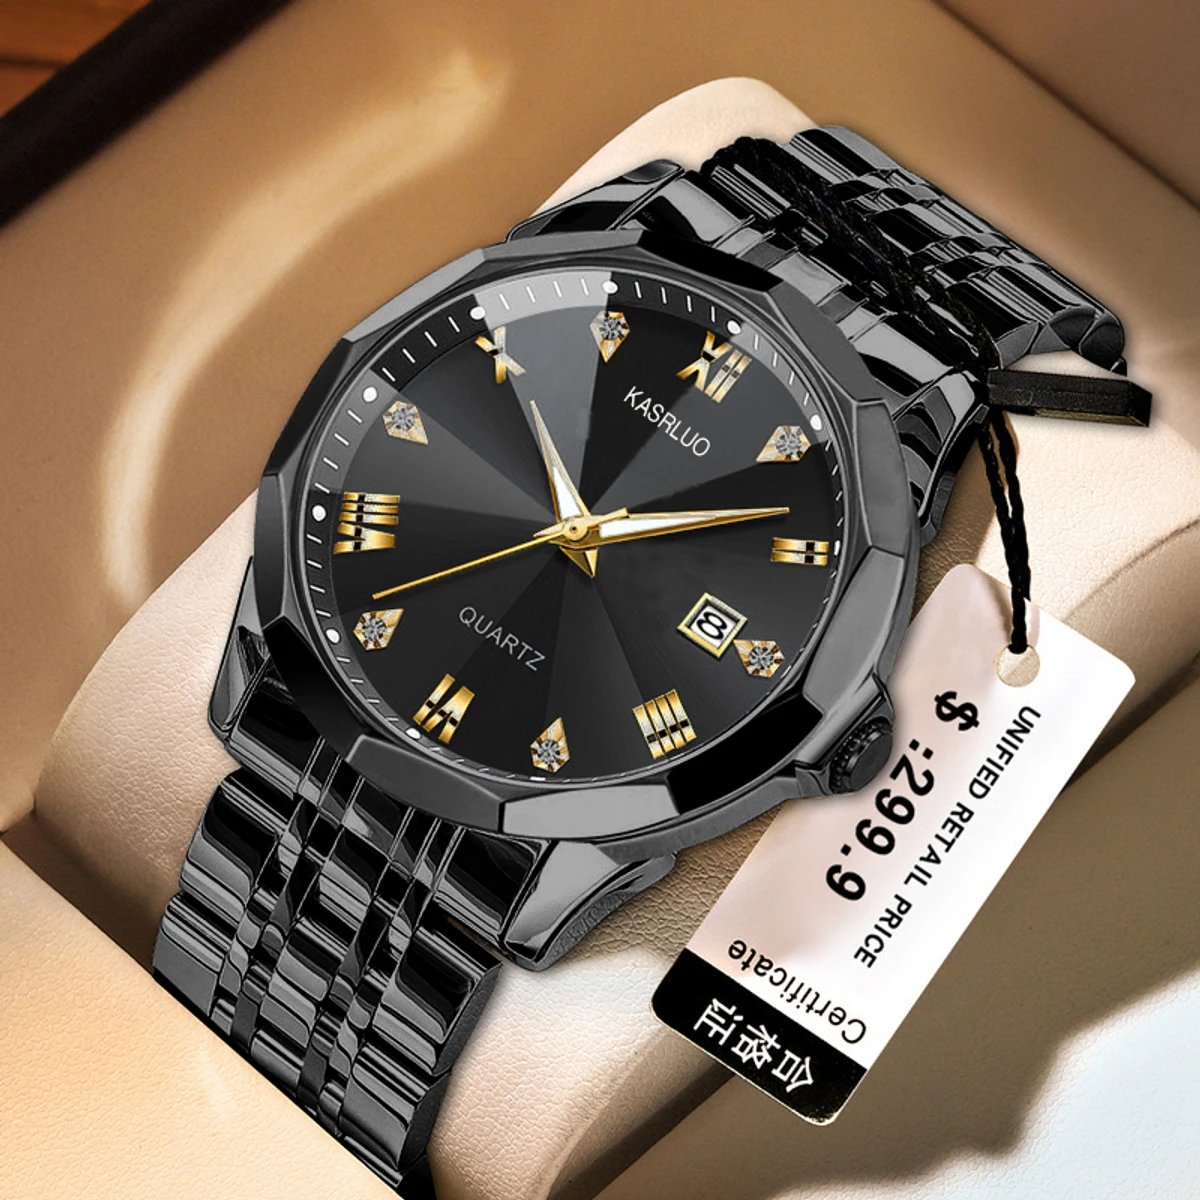 KASRLUO New Fashion Quartz Watch for Men Stainless Steel Waterproof Luminous Date Mens Watches Top Brand Luxury Clock- Black